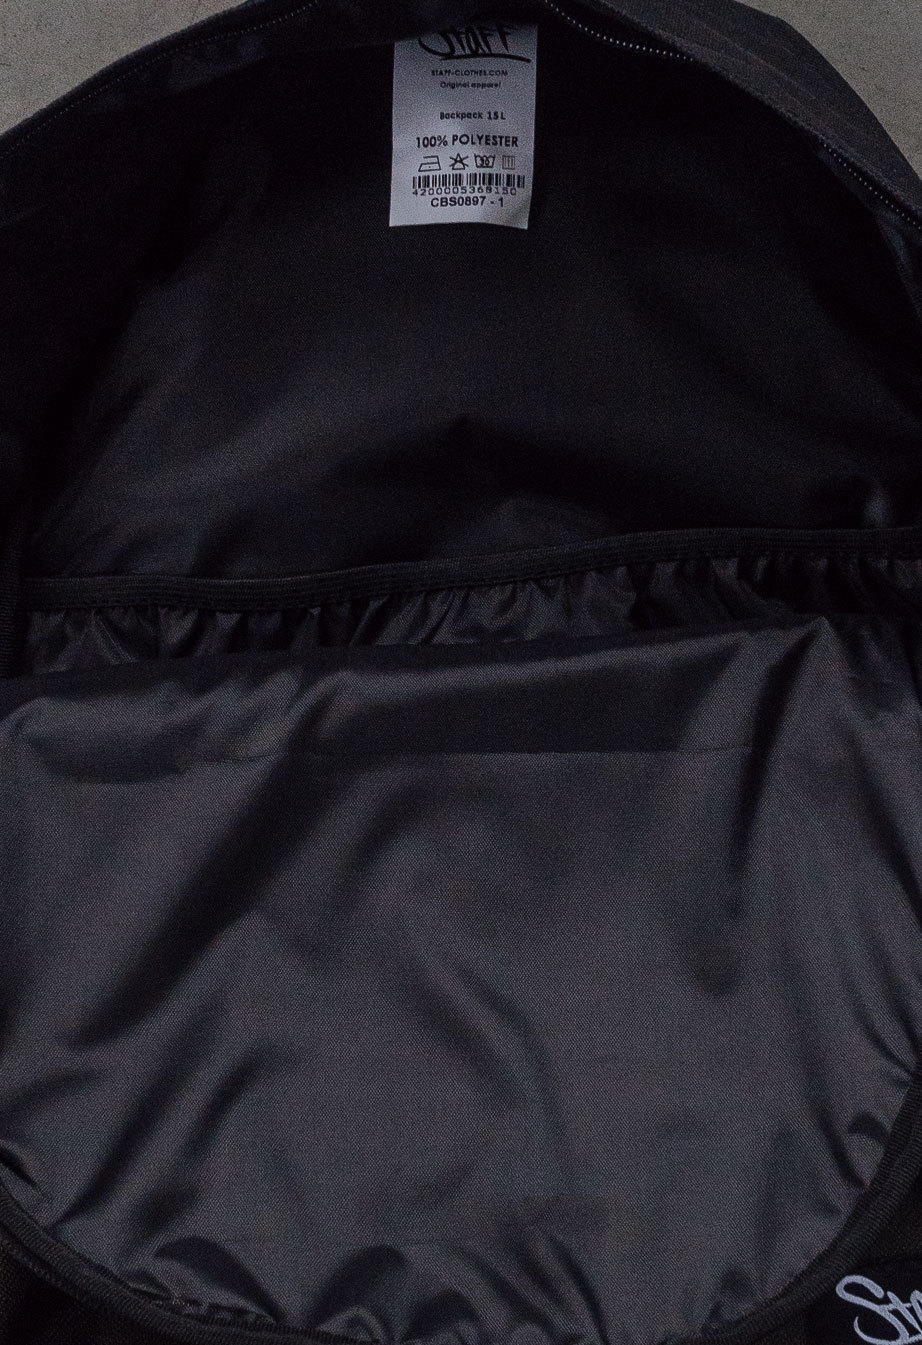 Plecak Staff 15L black & khaki